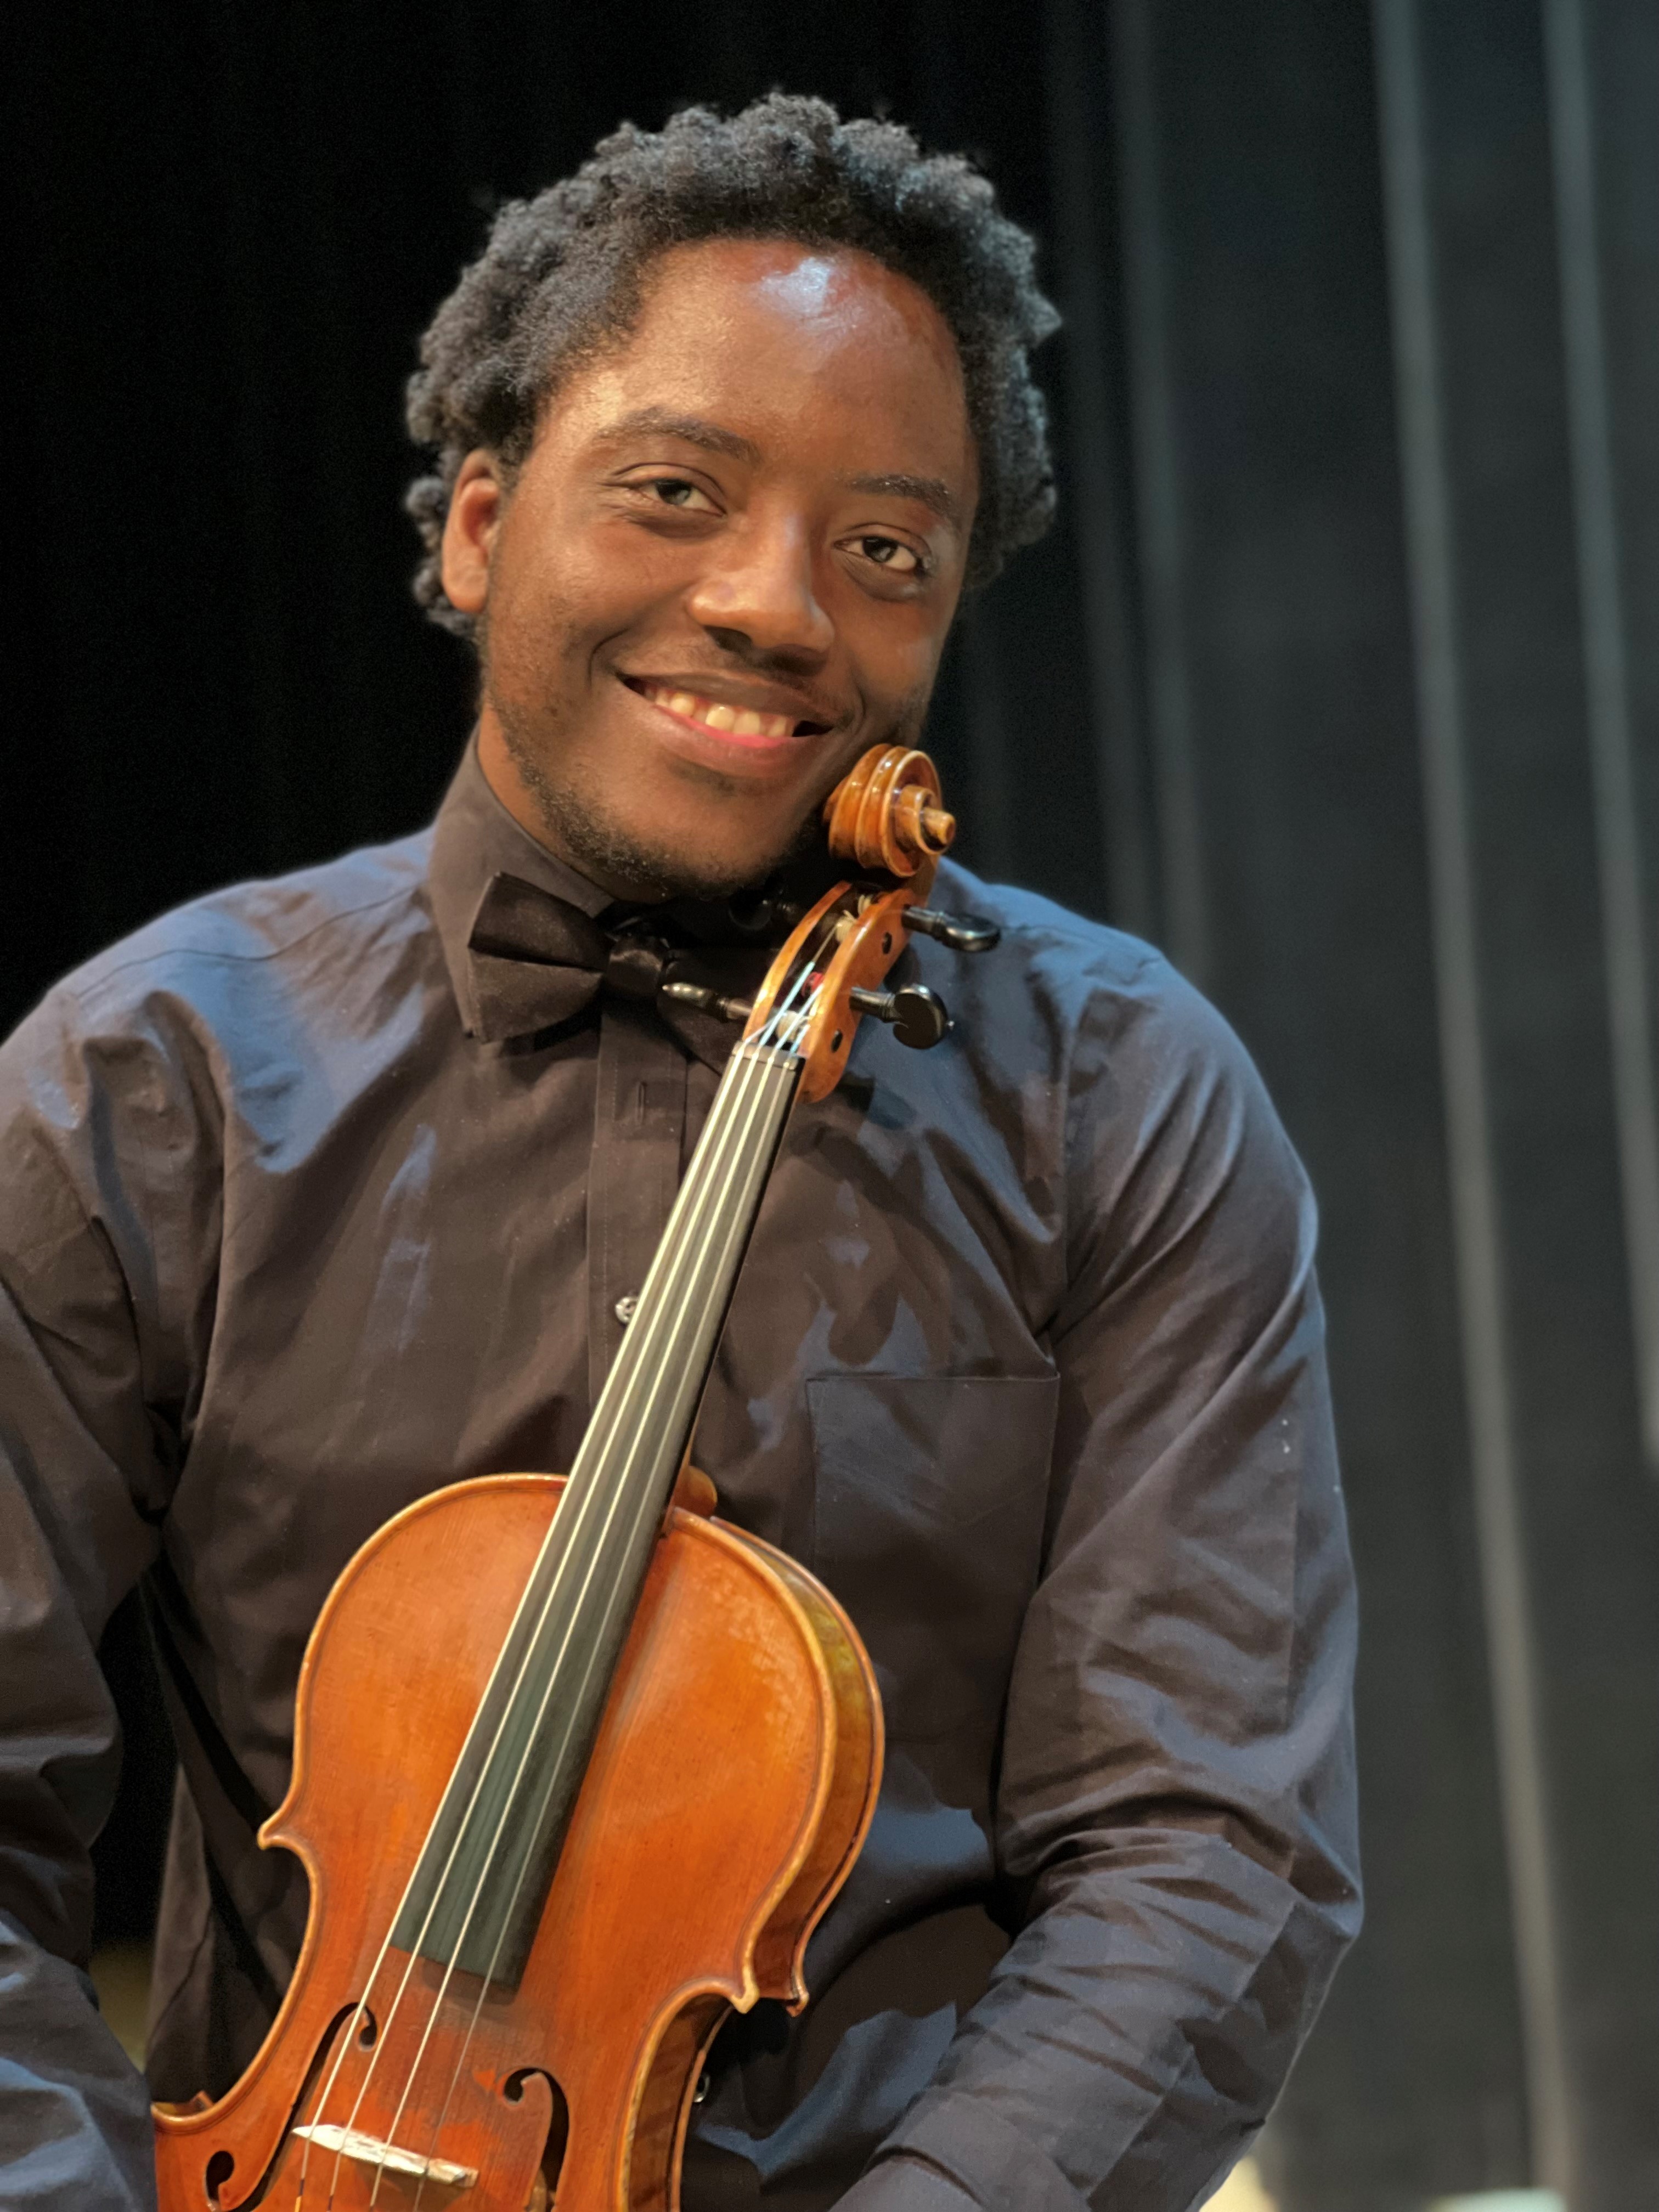 Rashawn Pressley smiling and holding his violin